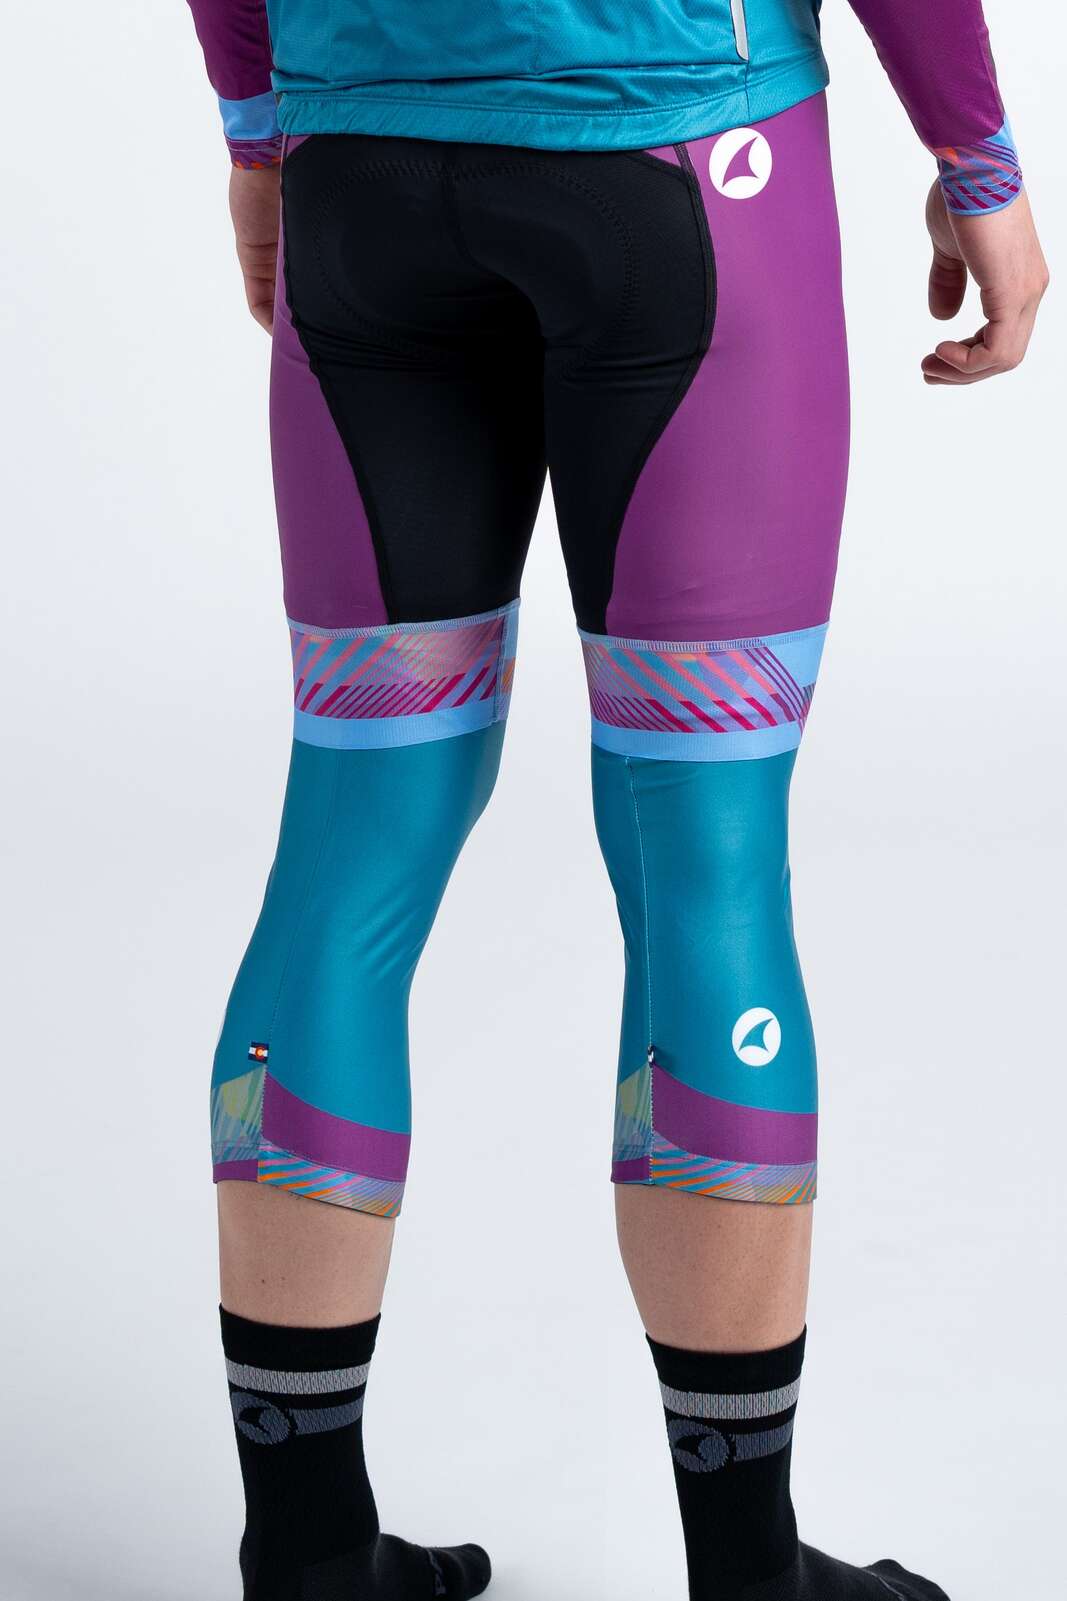 Custom Cycling Knee Warmers for Men & Women - Back View